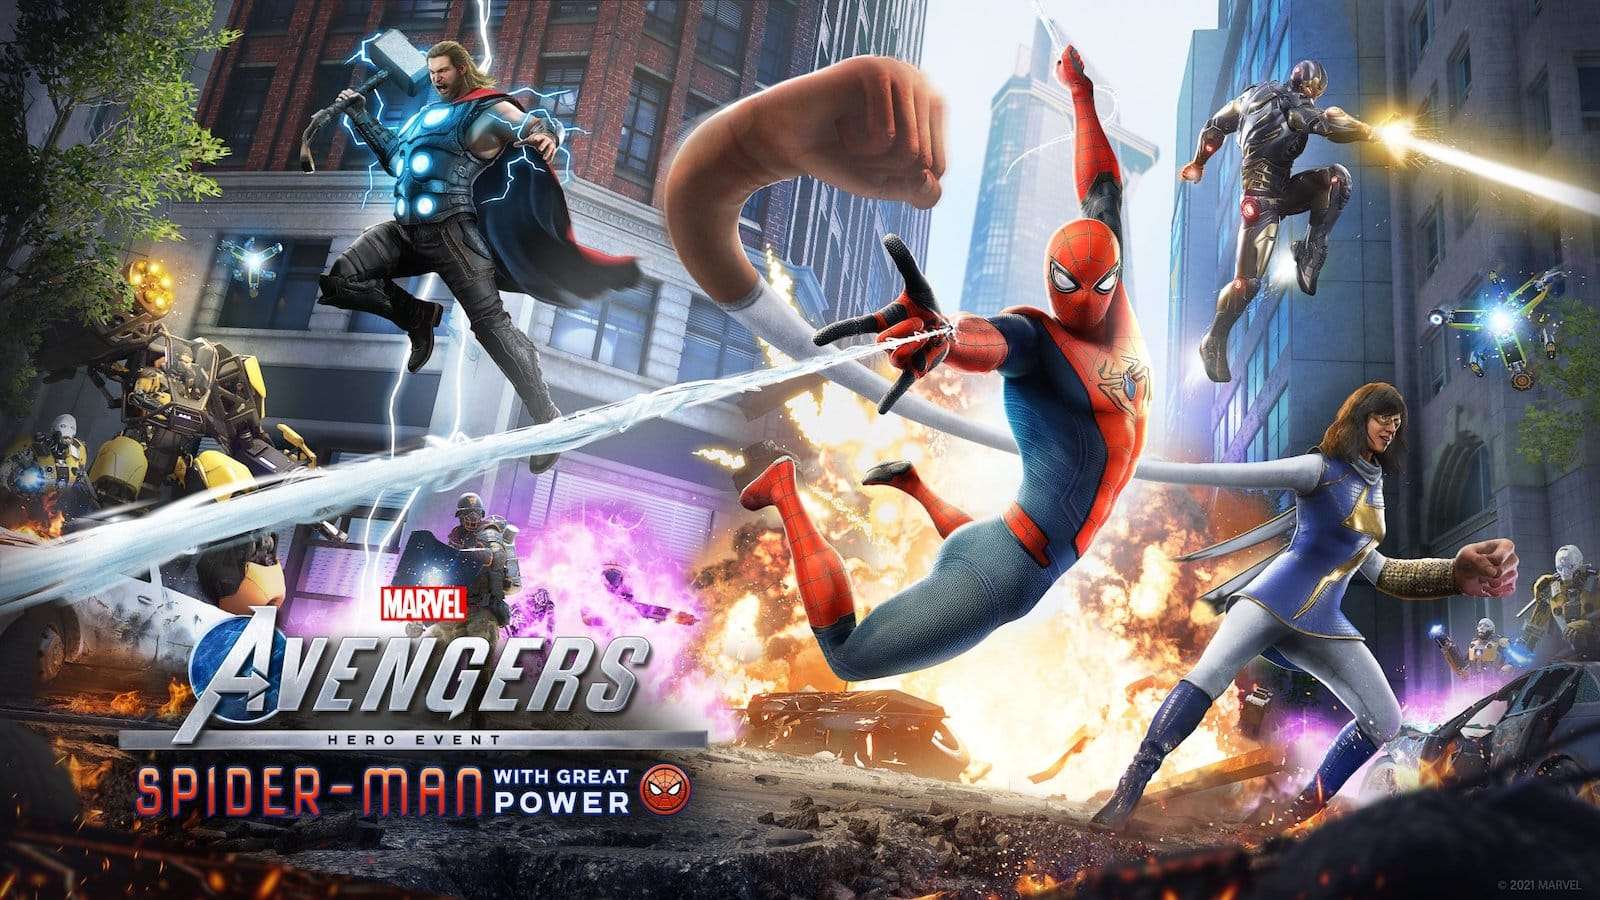 Marvel's Avengers Spider-Man first image